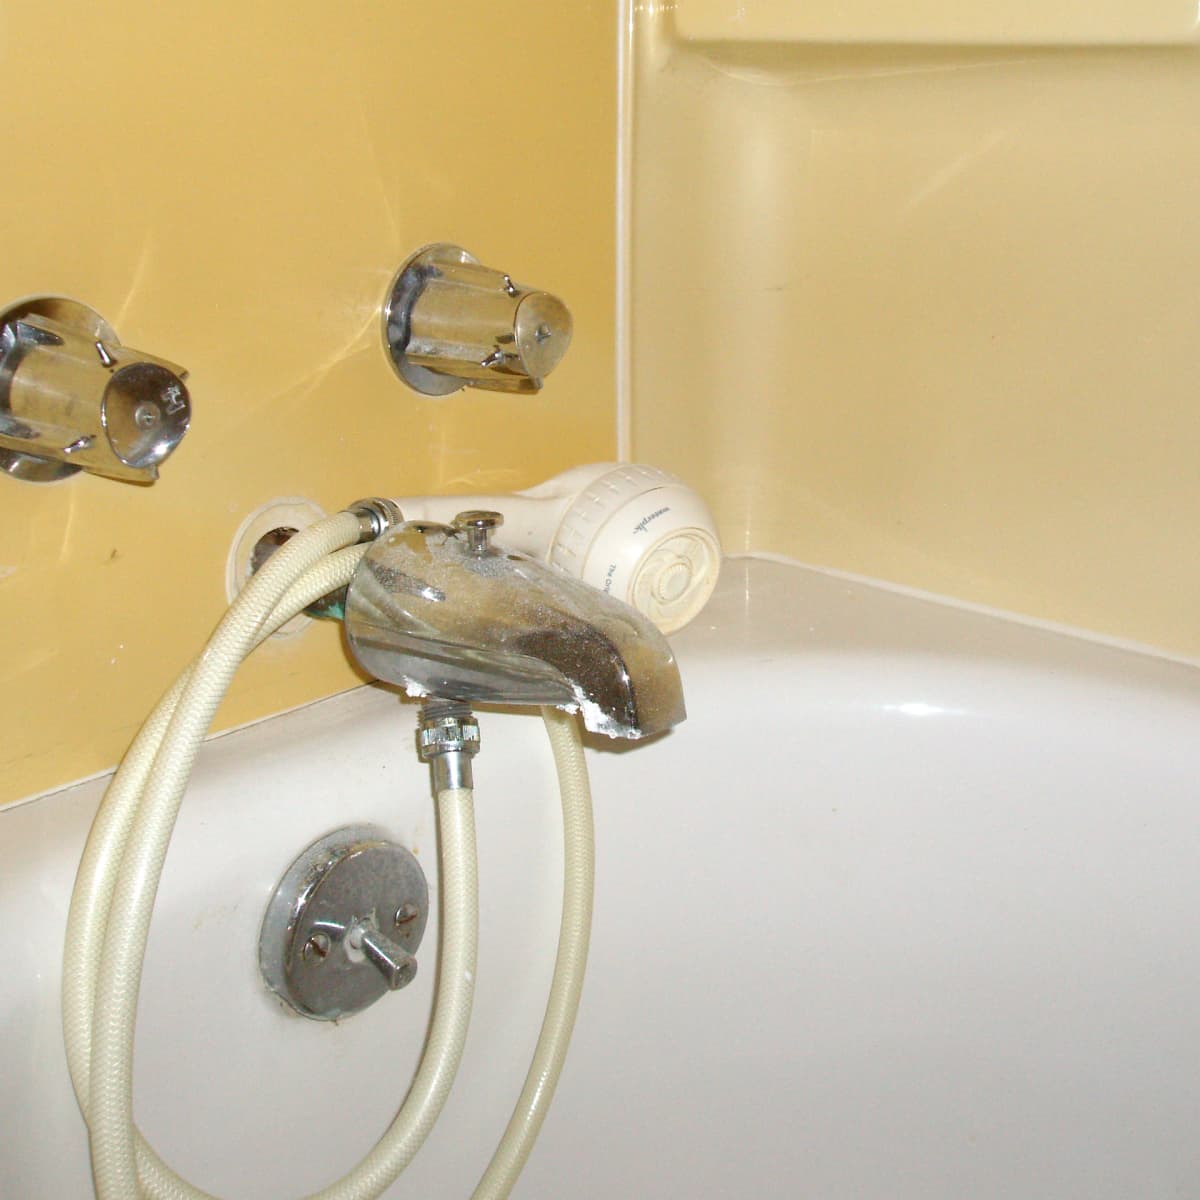 Handheld Showerheads, Bathtub Spout To Shower Conversion